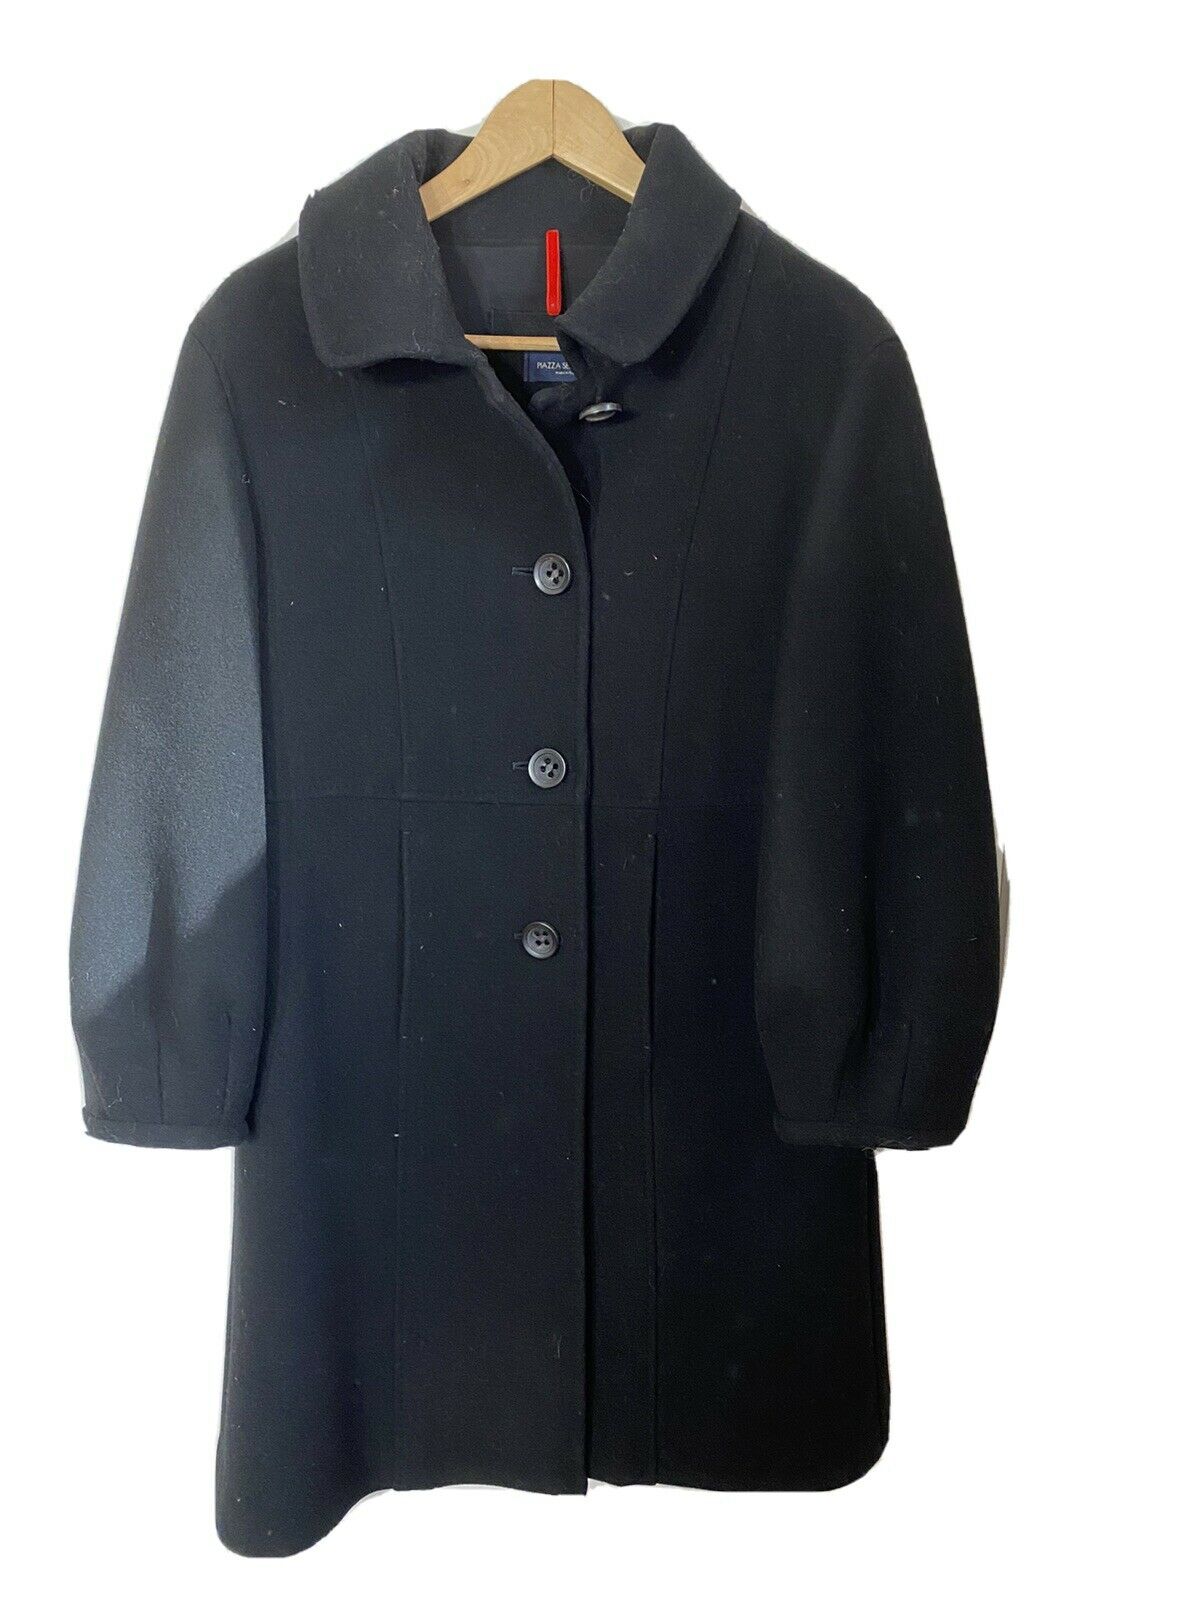 Msrp 2,400 PIAZZA SEMPIONE Black Wool Pea coat Jacket size 42 Small 6